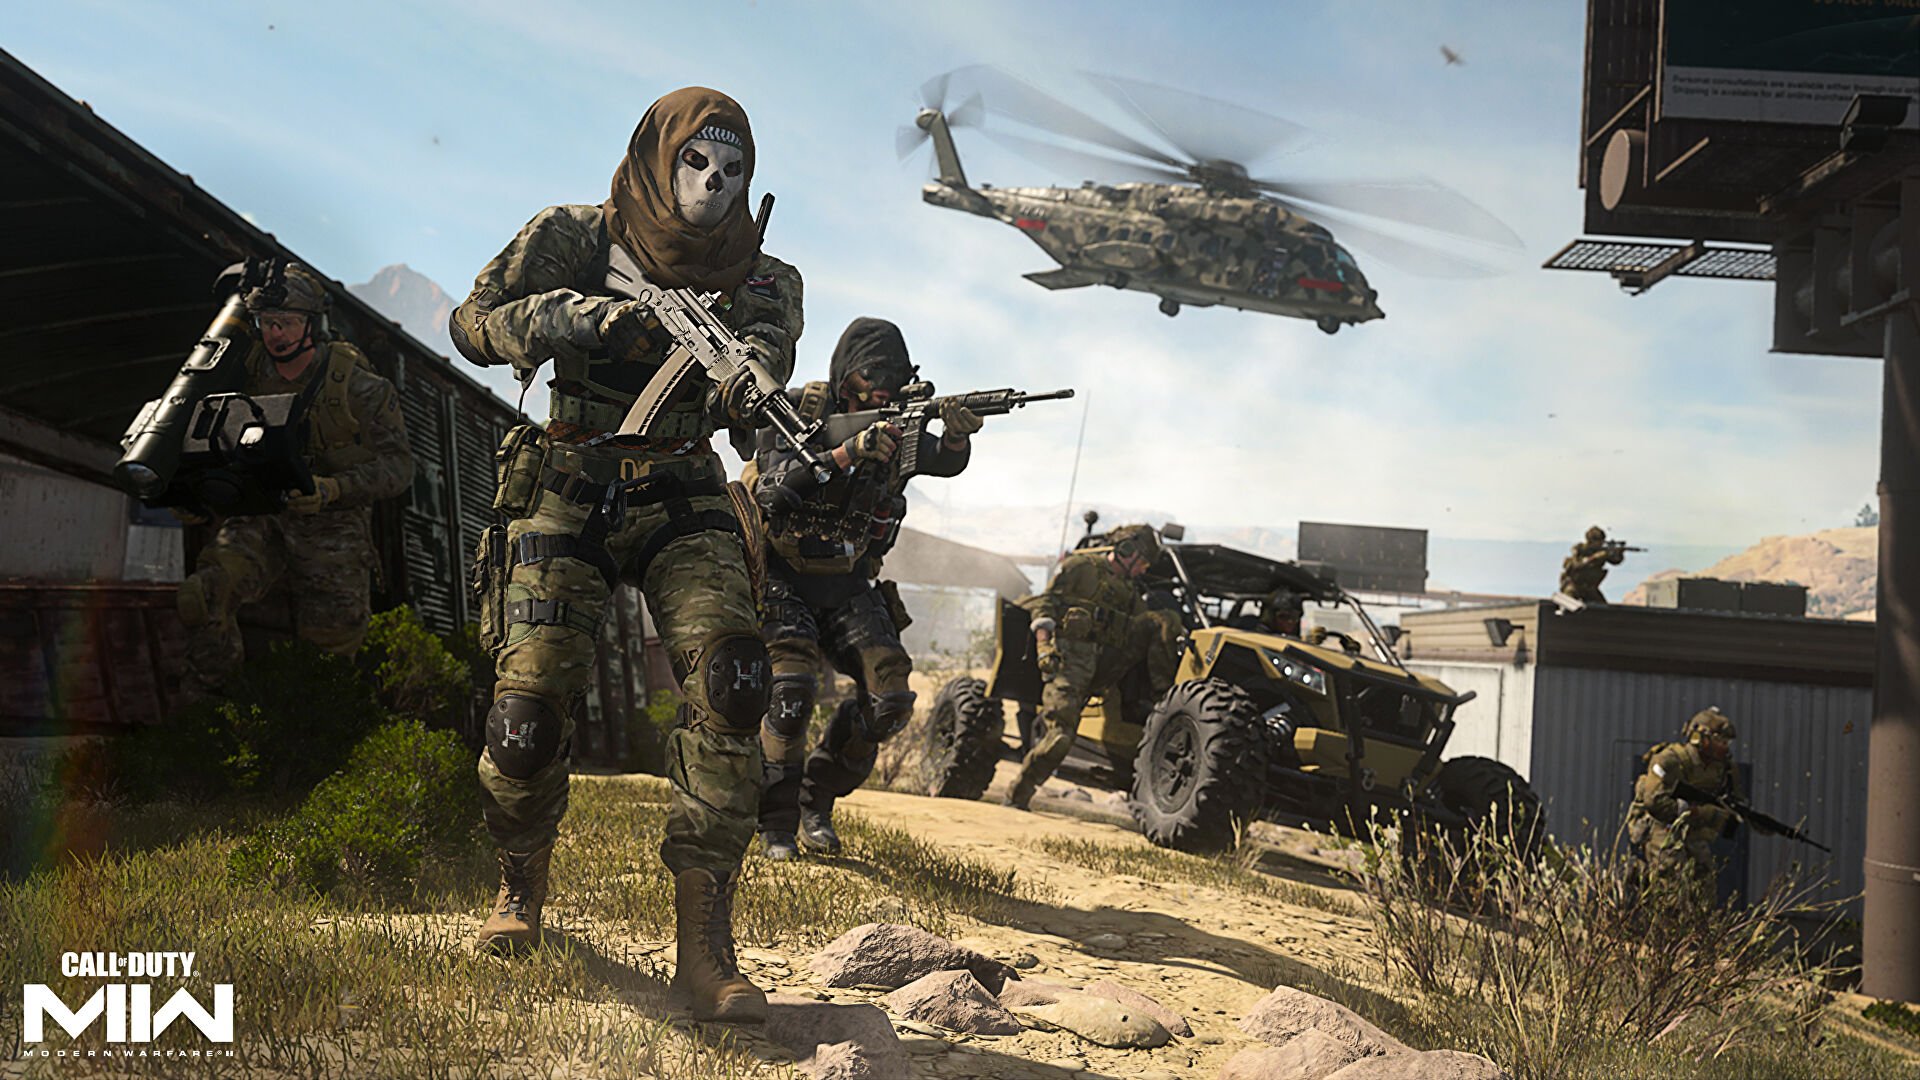 How to redeem your Call of Duty: Modern Warfare 2 beta code - Dot Esports